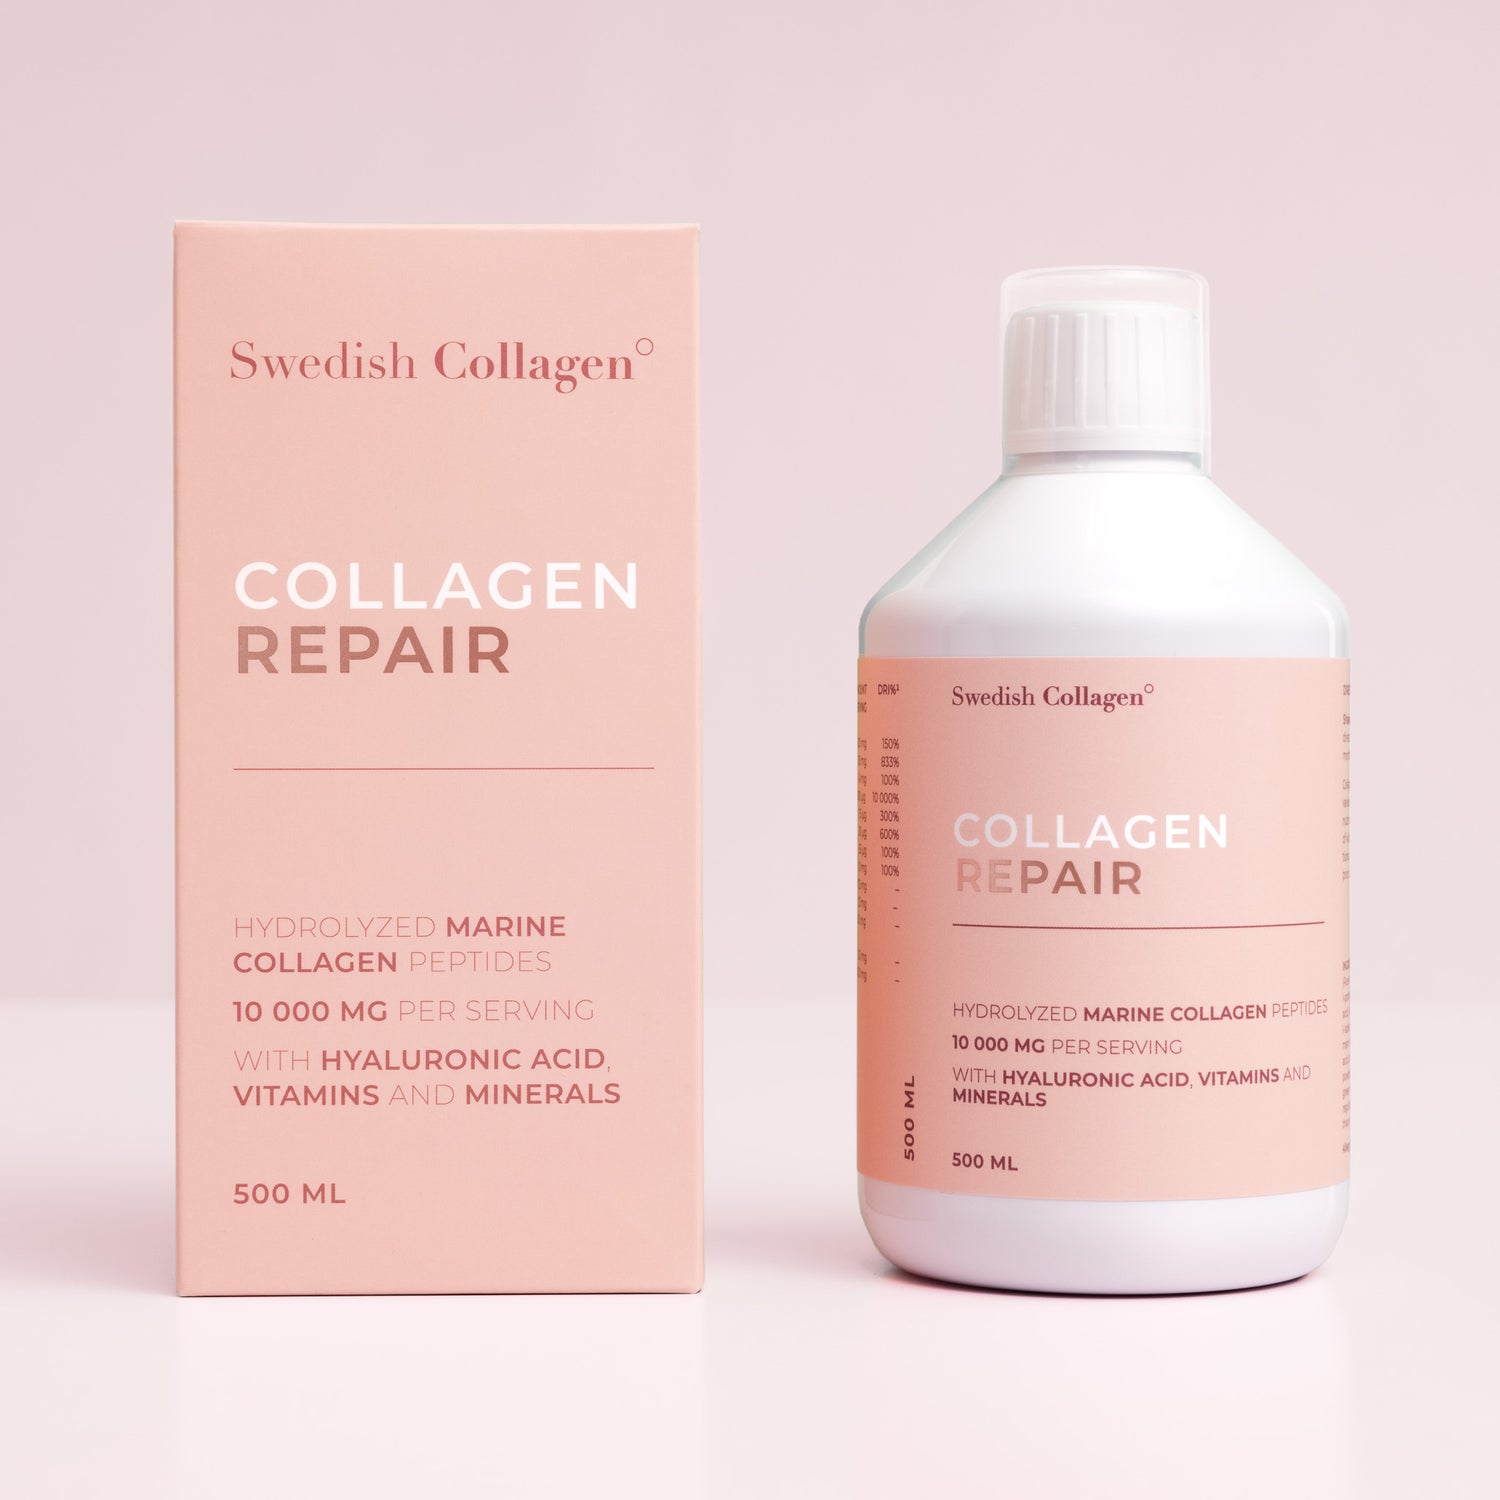 COLLAGEN REPAIR - Swedish Collagen Europe